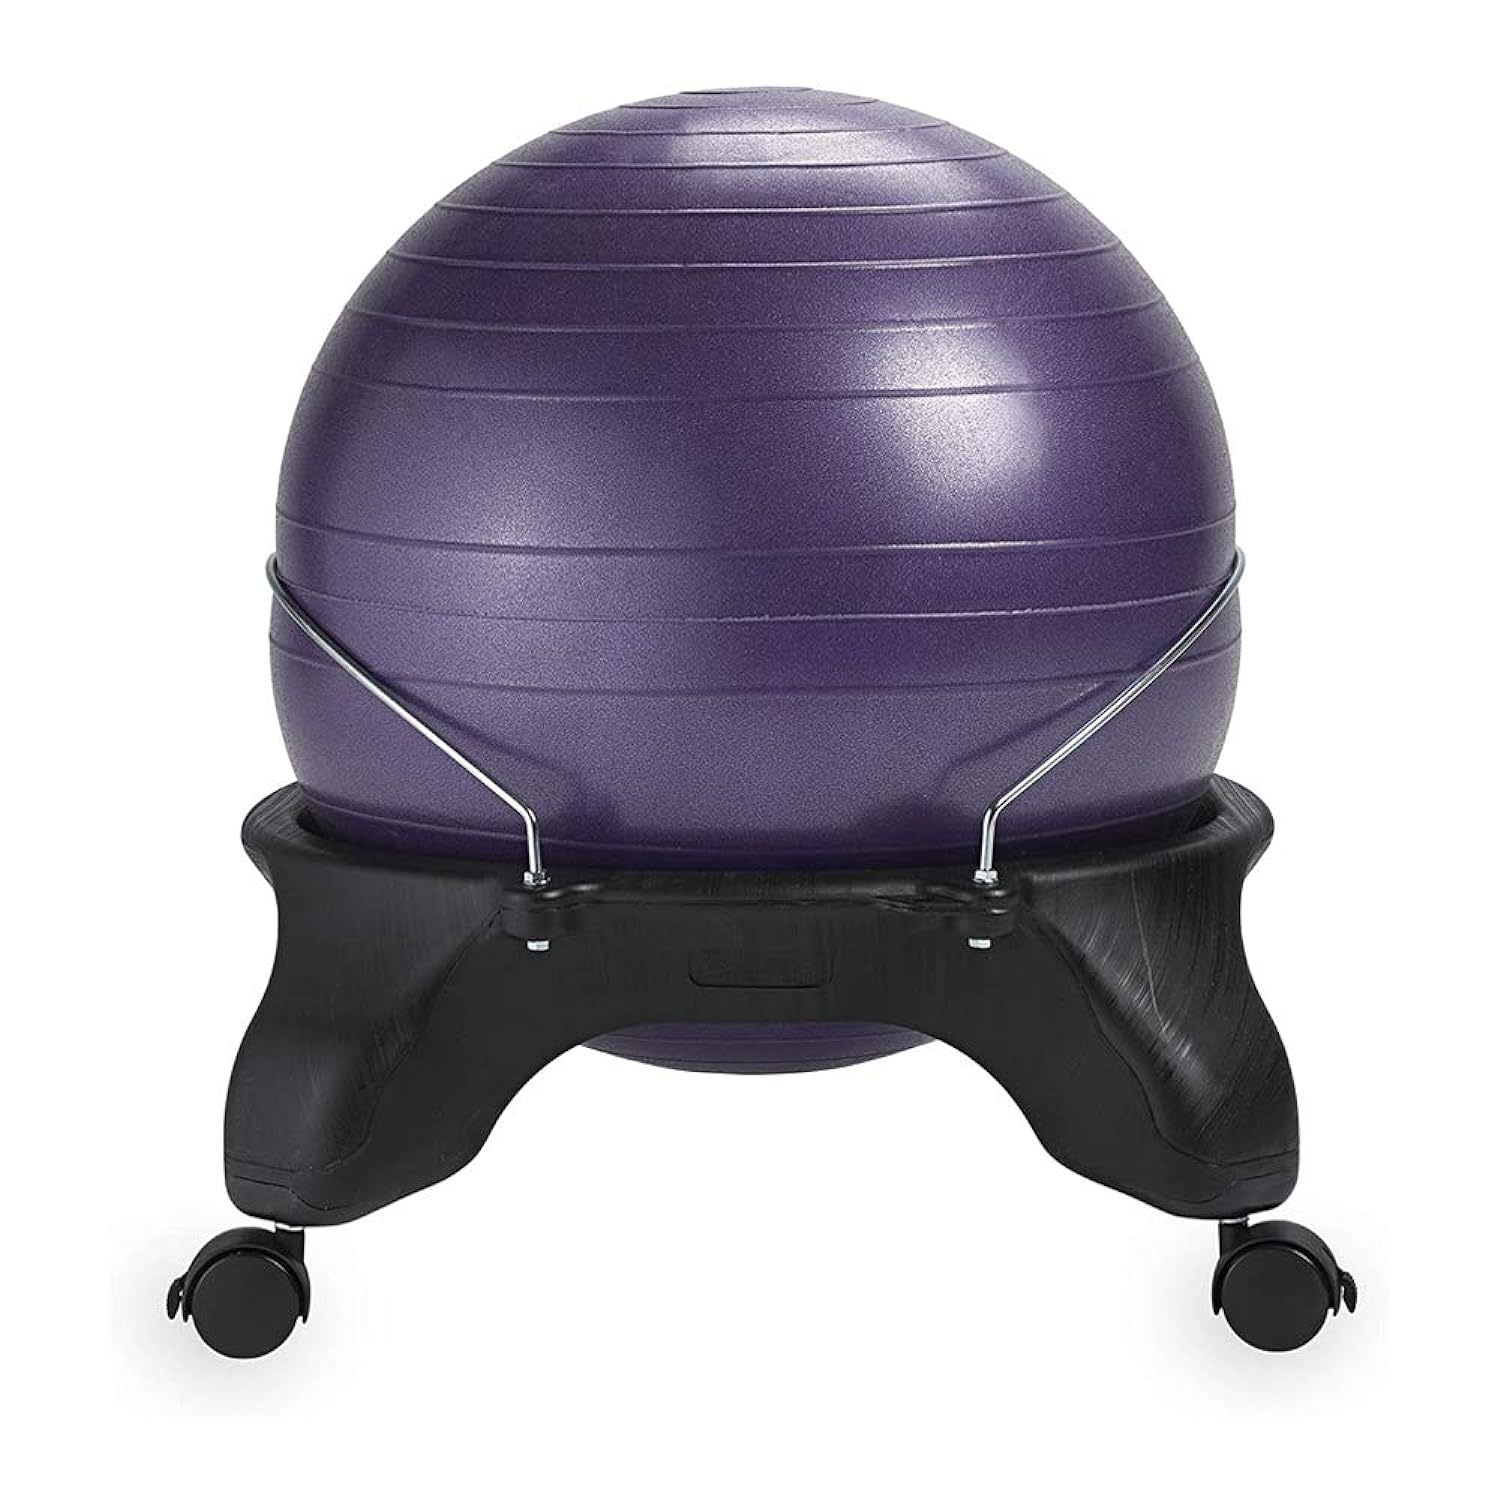 Gaiam Classic Backless Balance Ball Chair  Exercise Stability Yoga Ball Premium  - $111.99